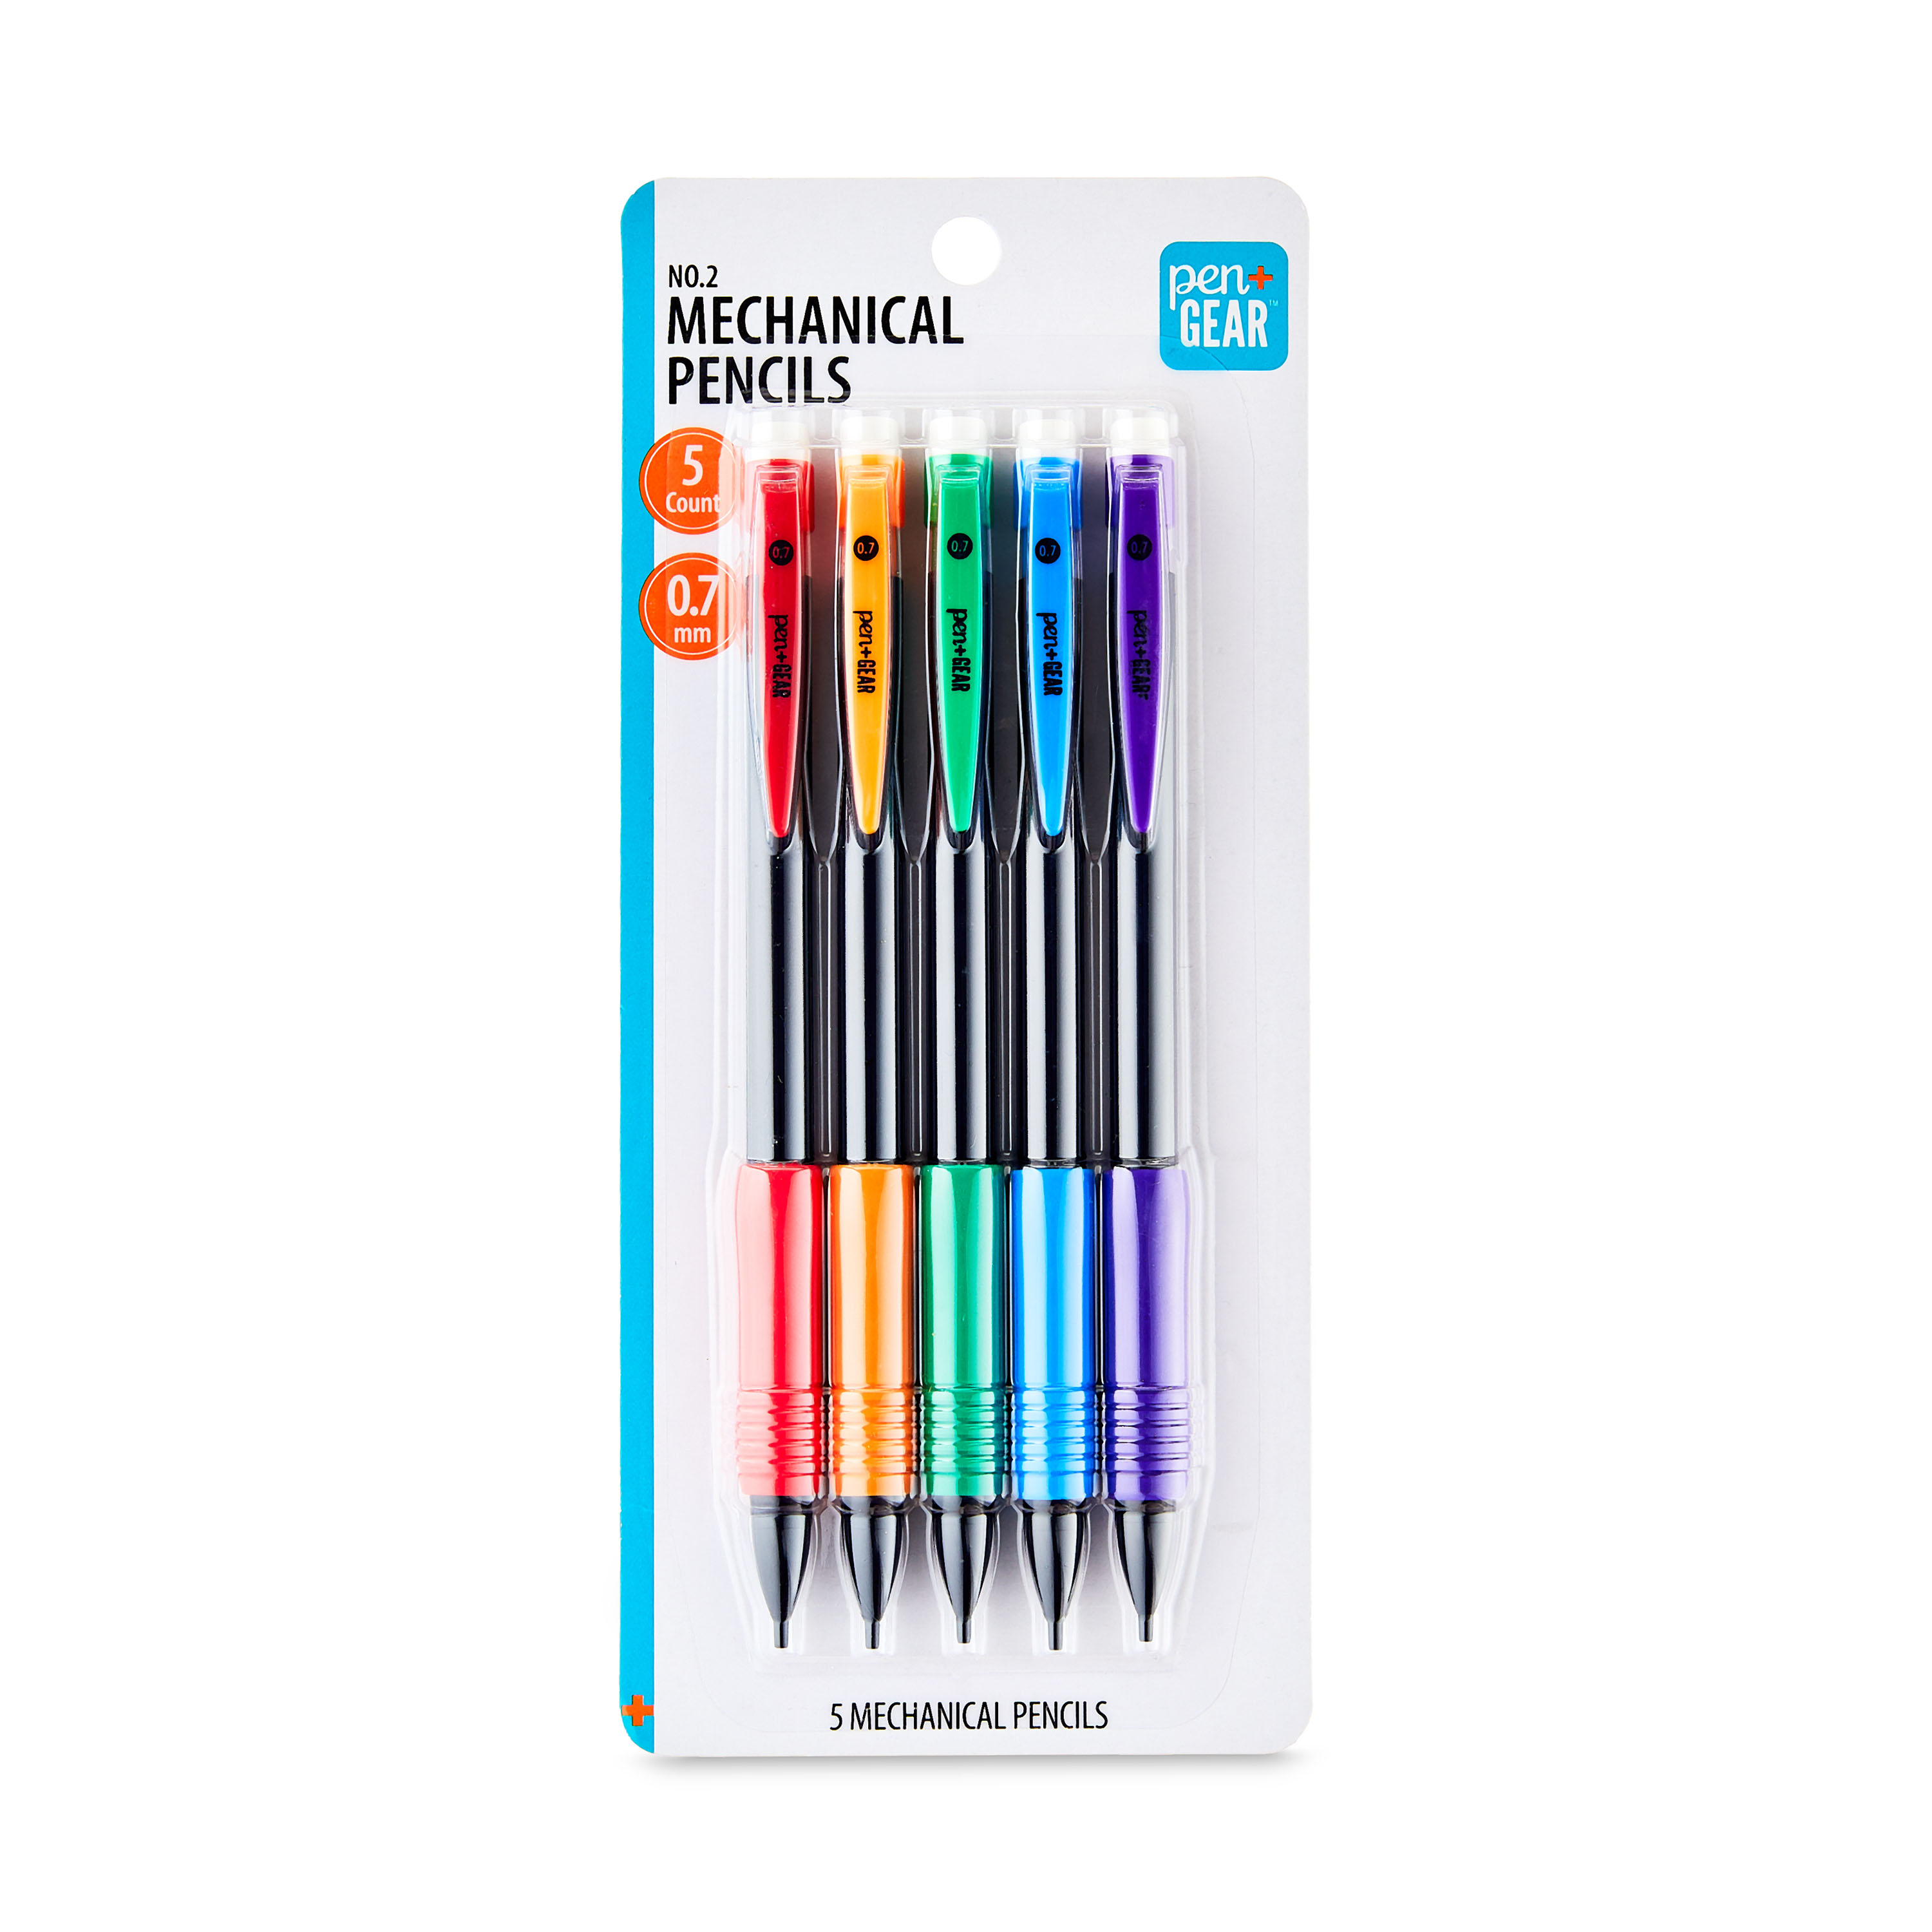 Pen+Gear No.2 Mechanical Pencils, 0.7mm, 5 Pack - image 1 of 8